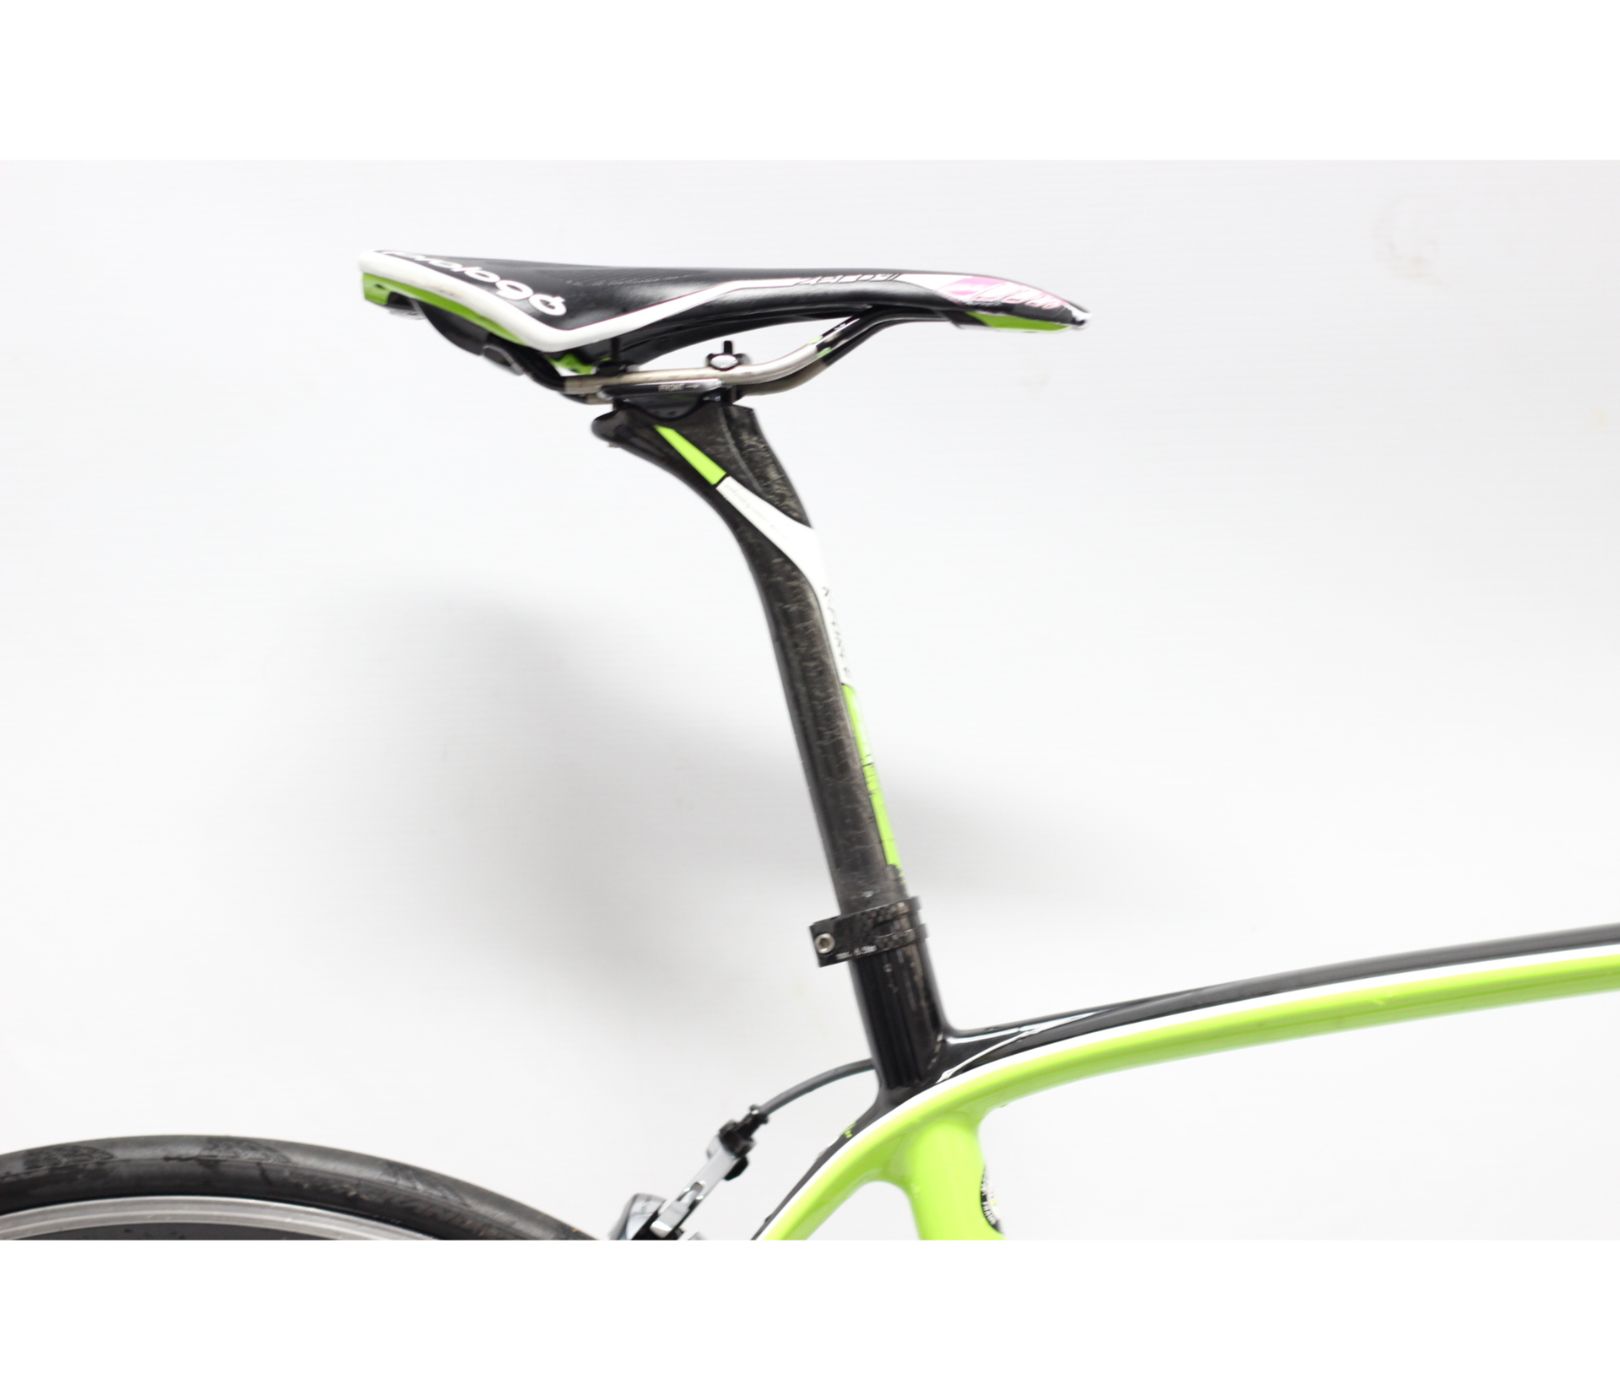 Pre-Owned Merida Scultura 4000 Carbon Road Bike - 54cm